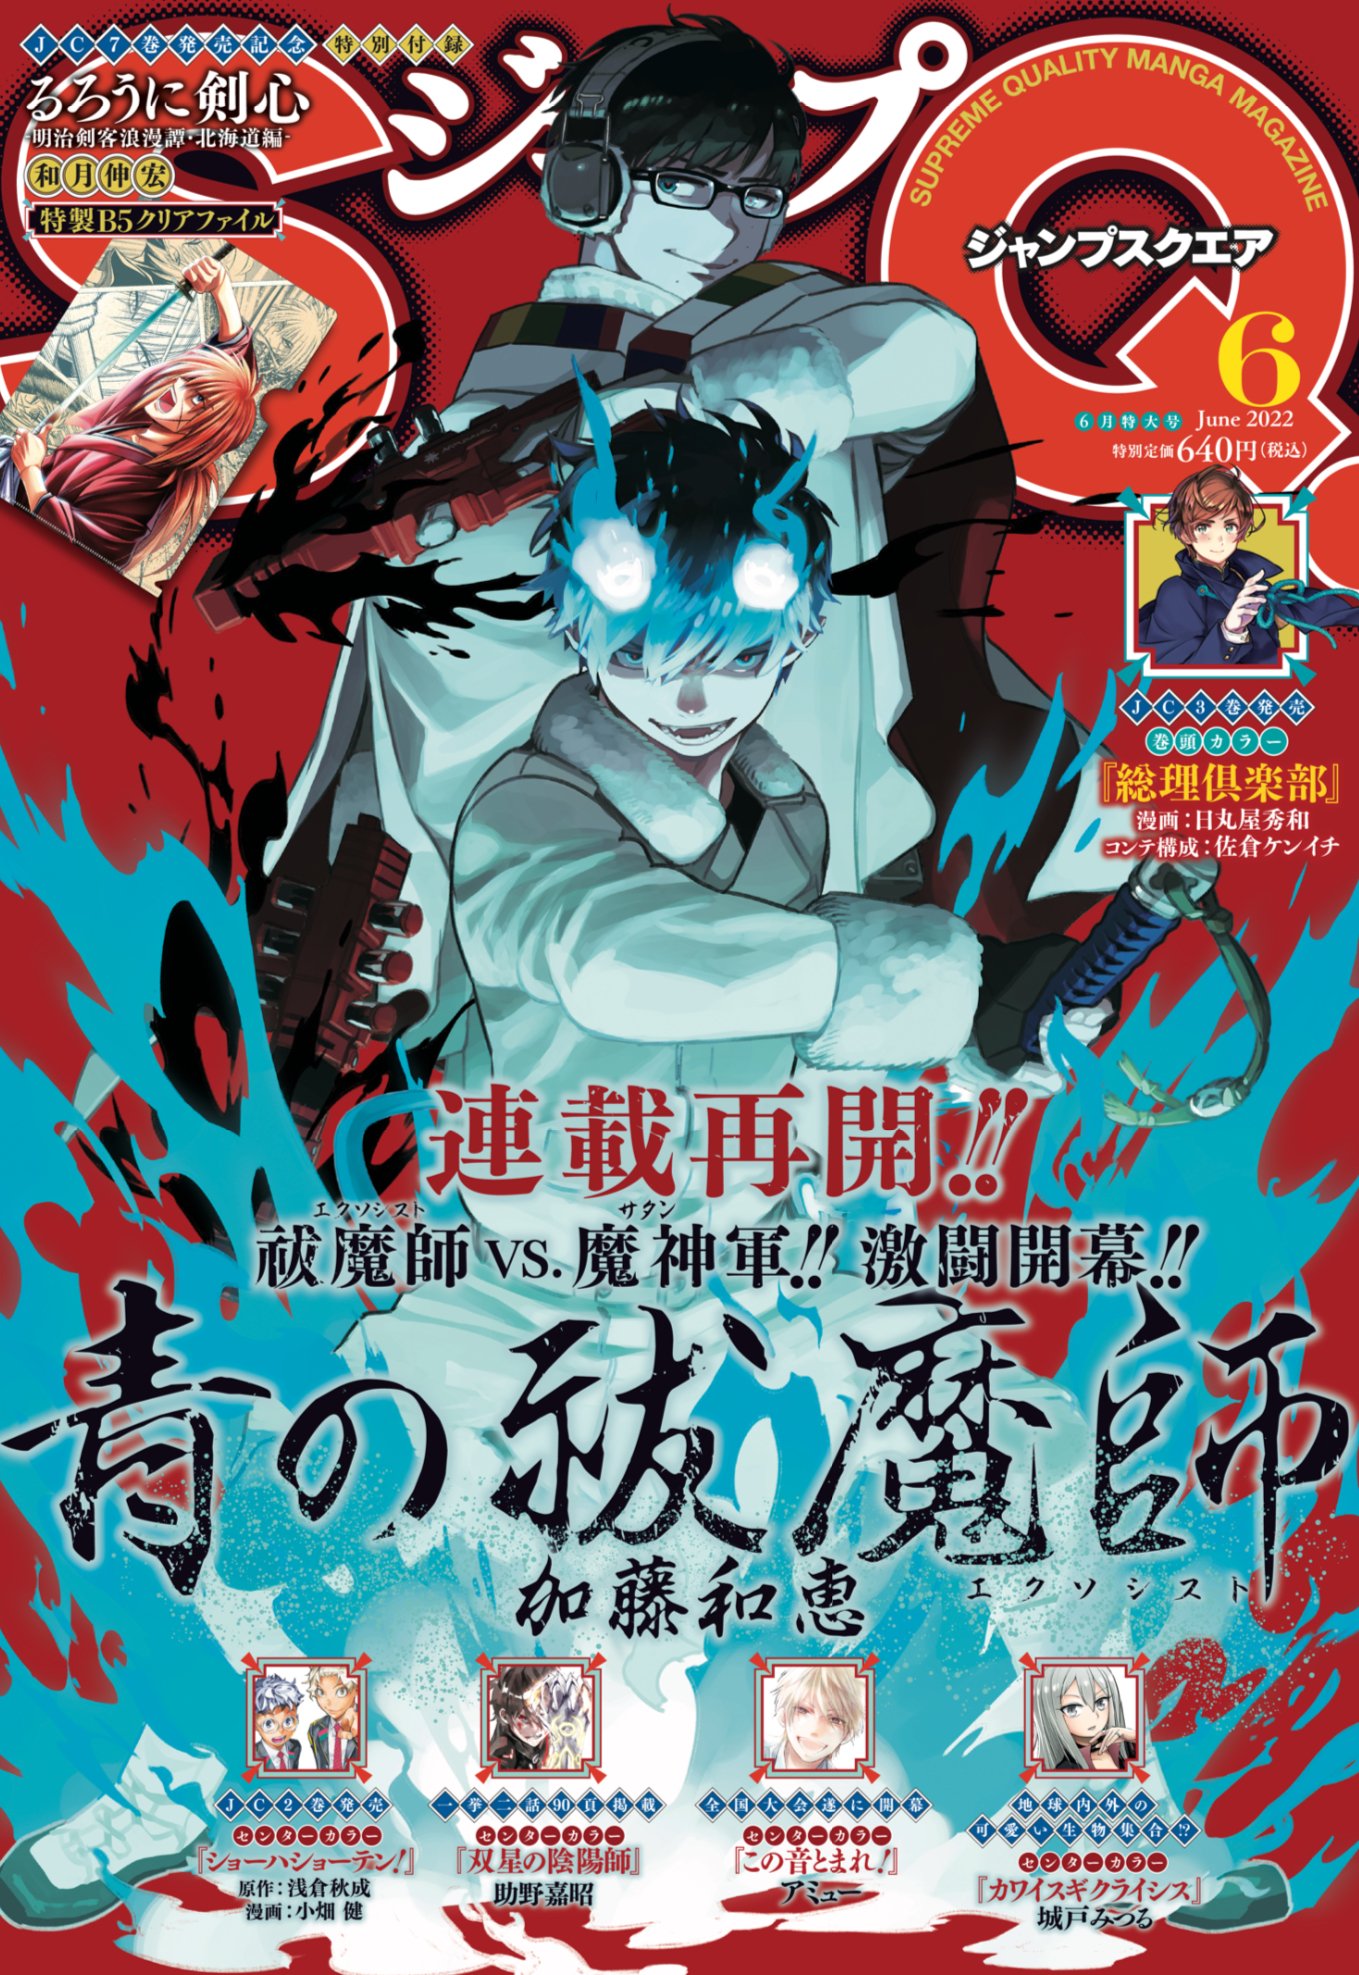 VIZ | Read Blue Exorcist Manga Free - Official Shonen Jump From Japan